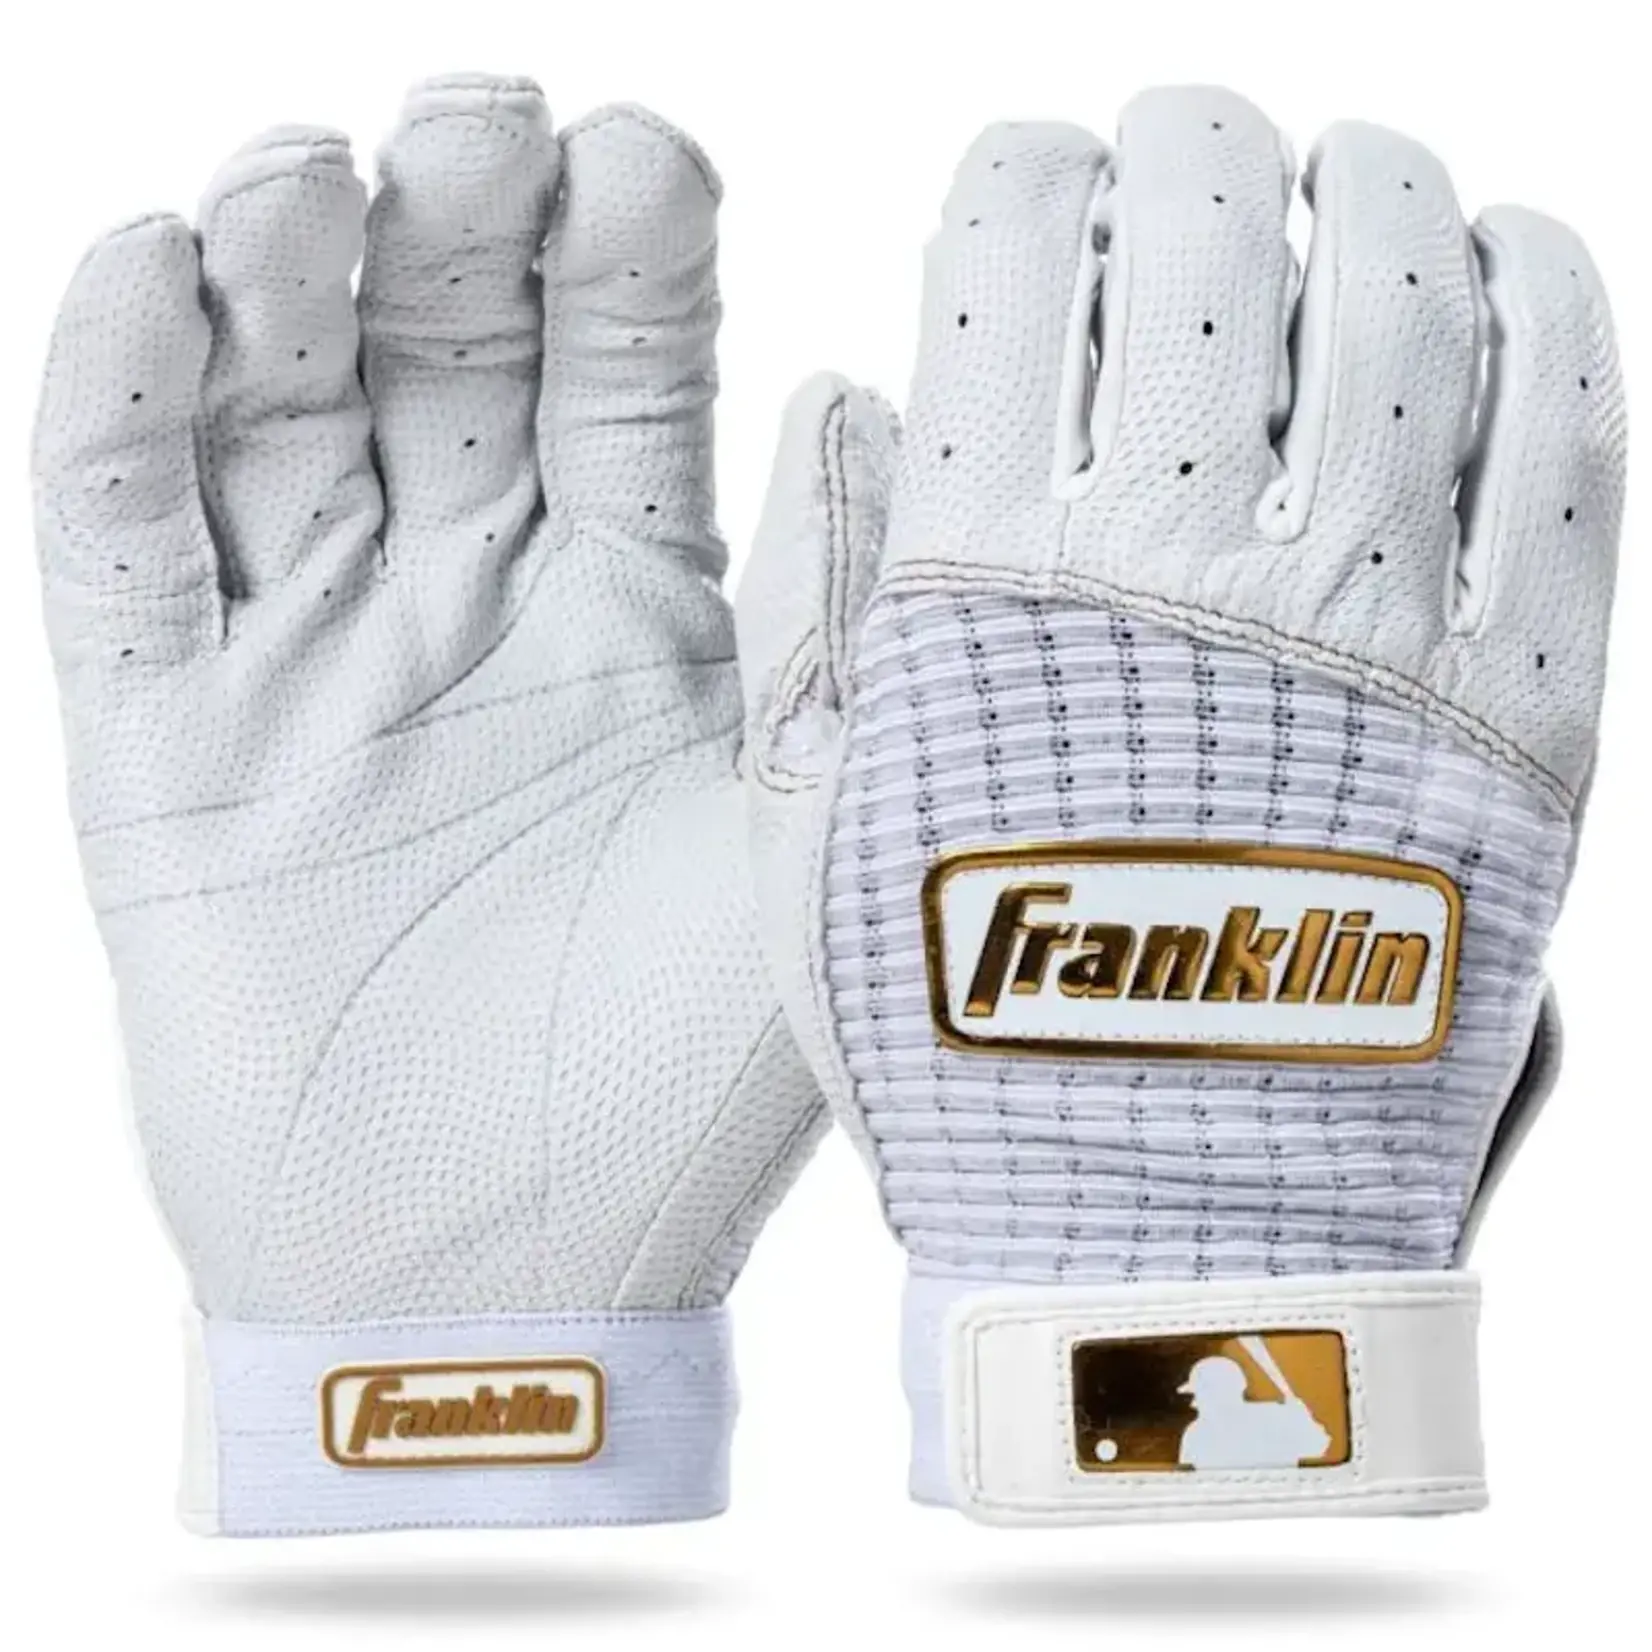 Franklin Franklin Pro Classic Batting agloves